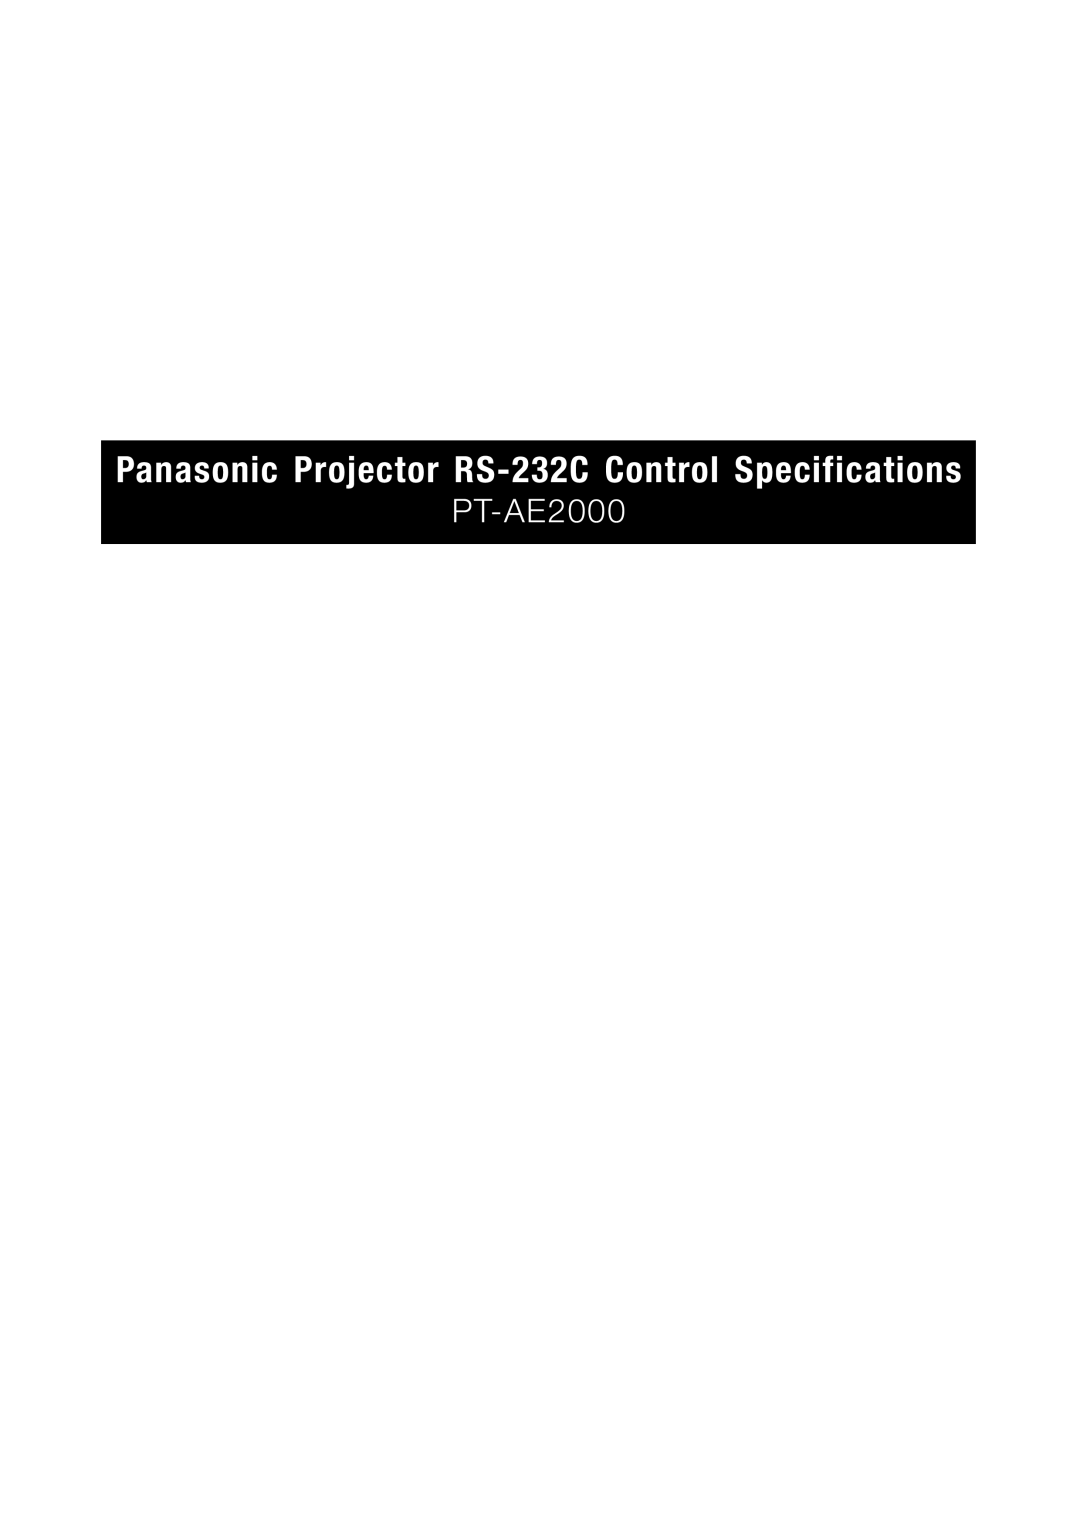 Panasonic PT AE2000 specifications Panasonic Projector RS-232C Control Specifications, PT-AE2000 